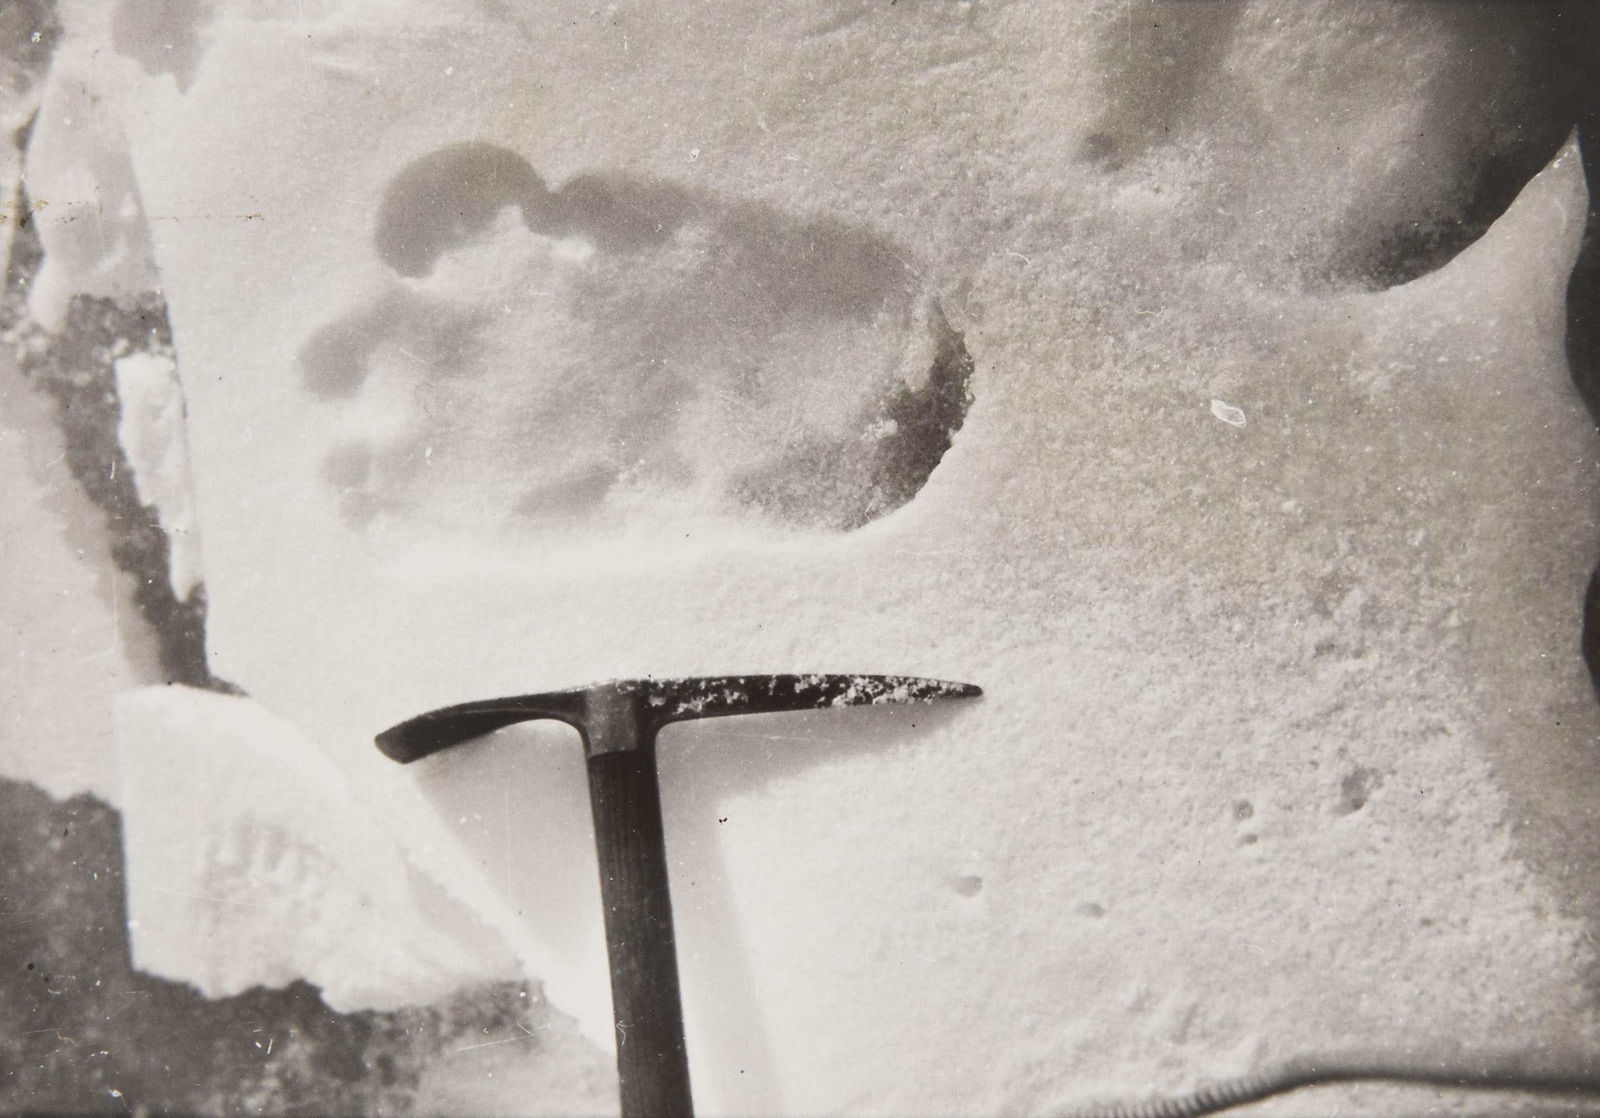  The original framing of Shipton's famous "Yeti footprint" photo. 